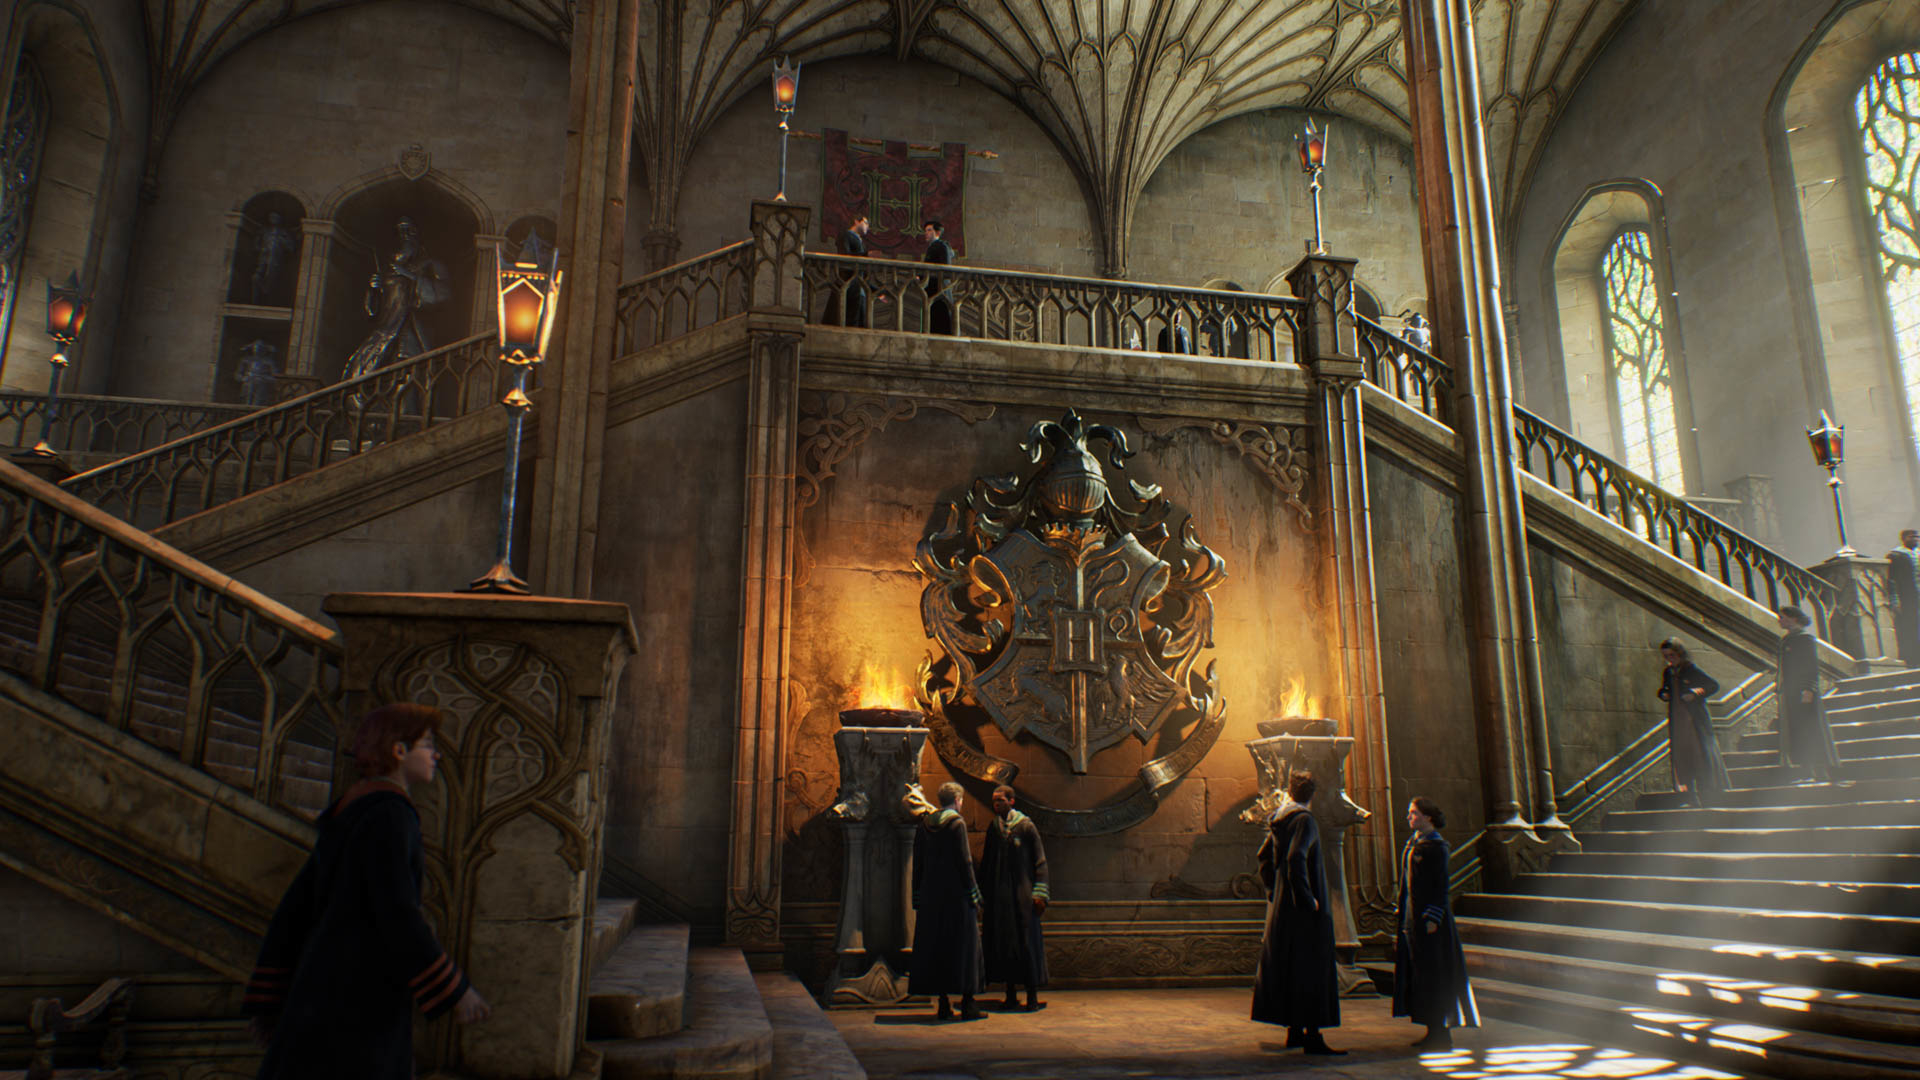 Students gather around near the main entrance of Hogwarts